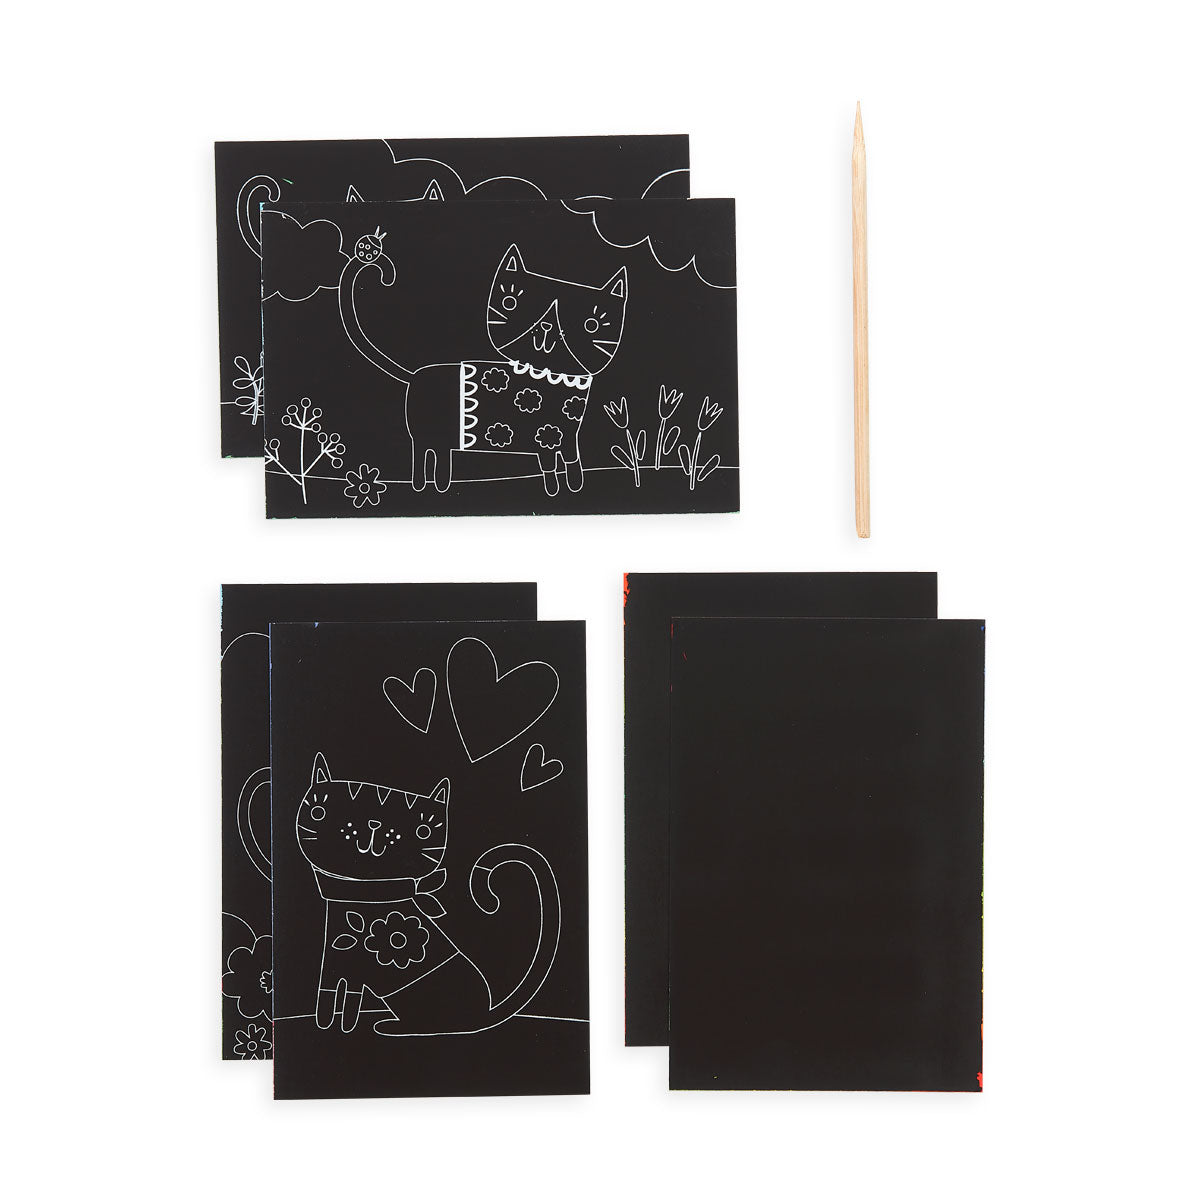 ooly Scratch & Scribble Cutie Cats Mini Scratch Art Kit